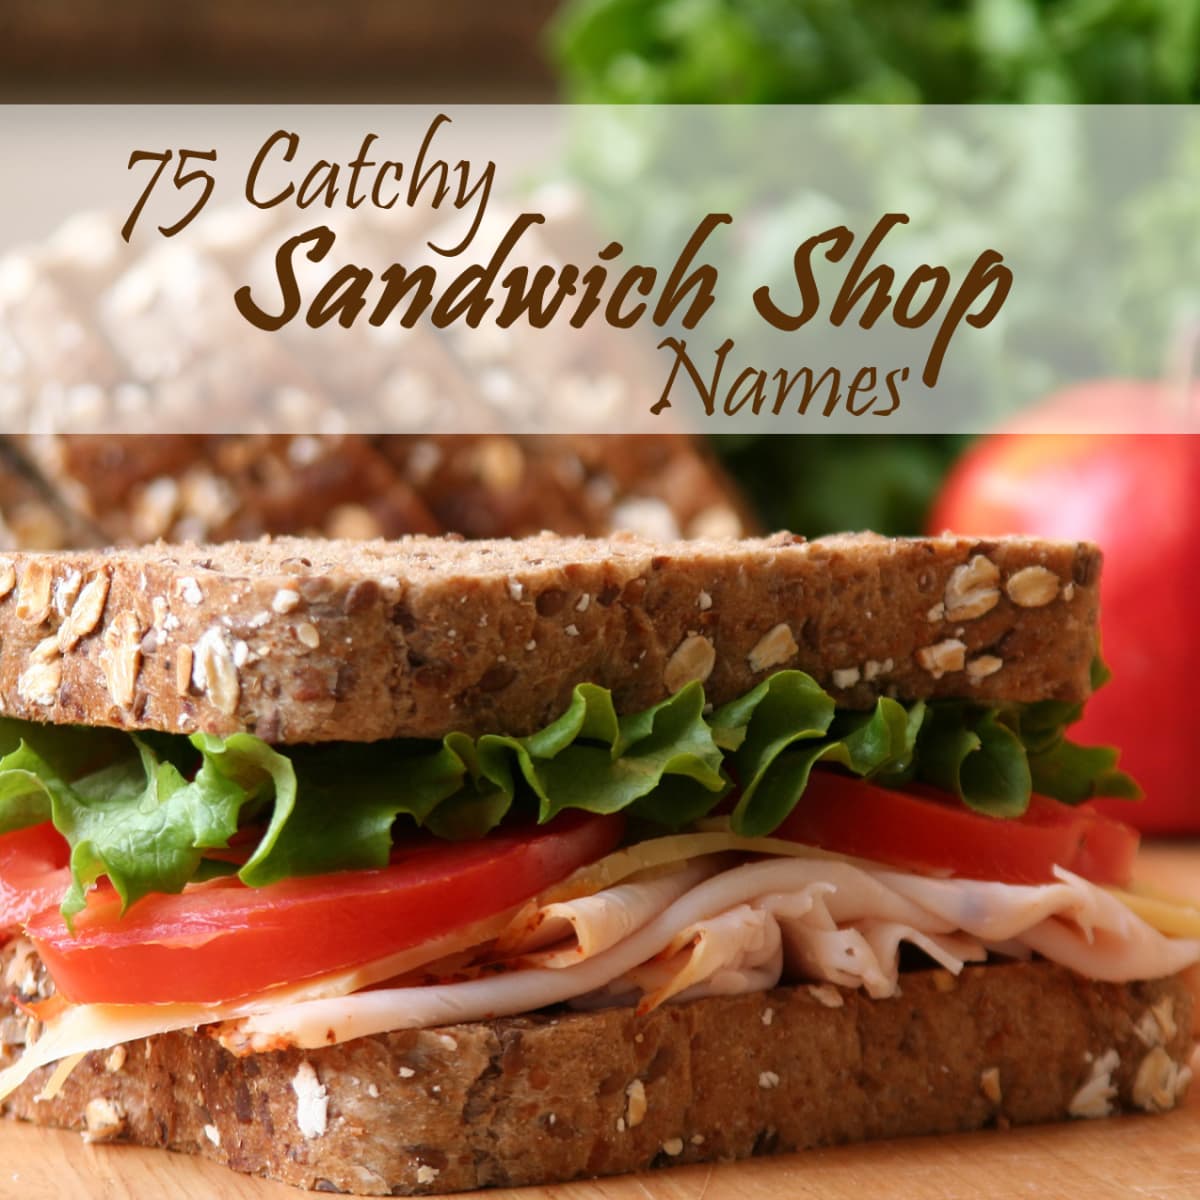 75 Catchy Sandwich Shop Names - ToughNickel